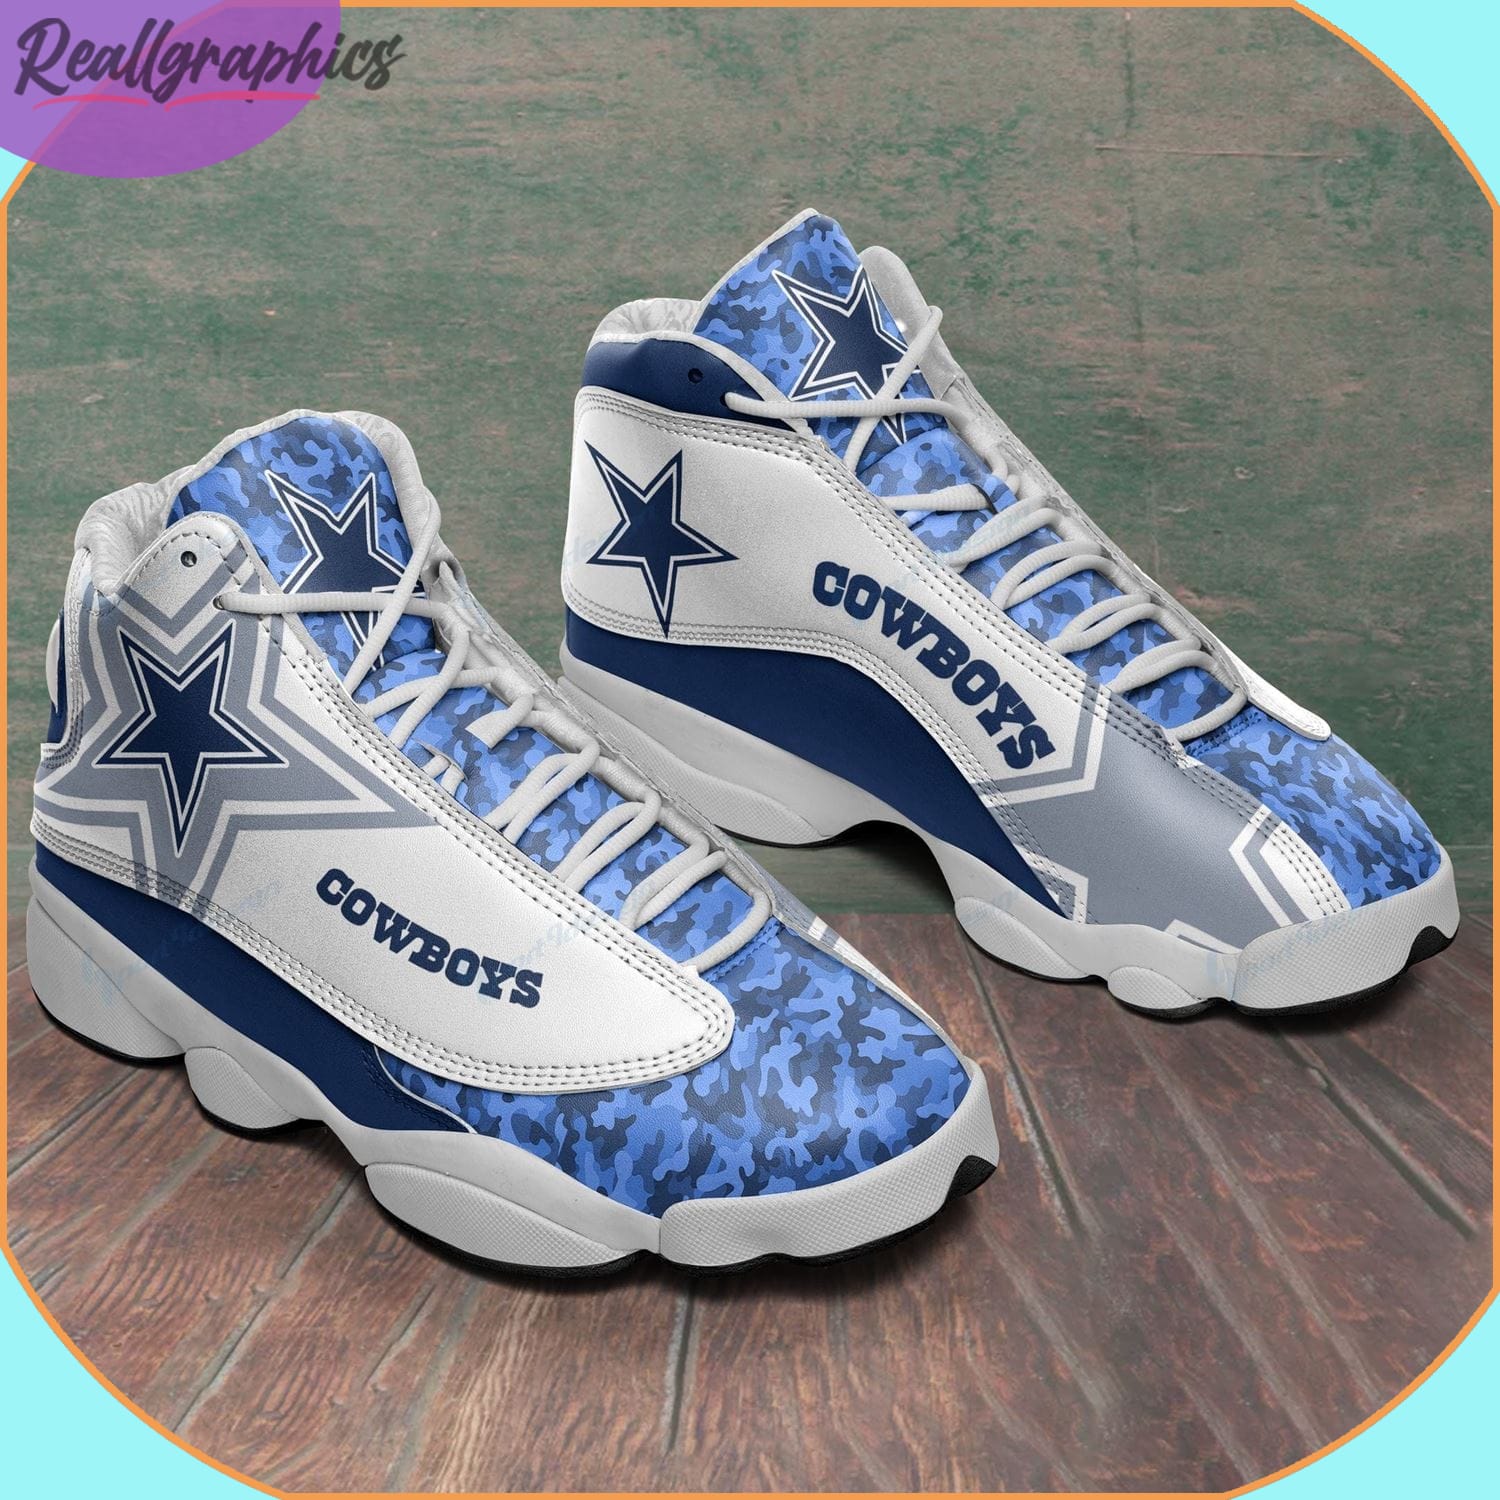 Dallas Cowboys Air Jordan 13 Sneakers, Cowboys Limited Shoes